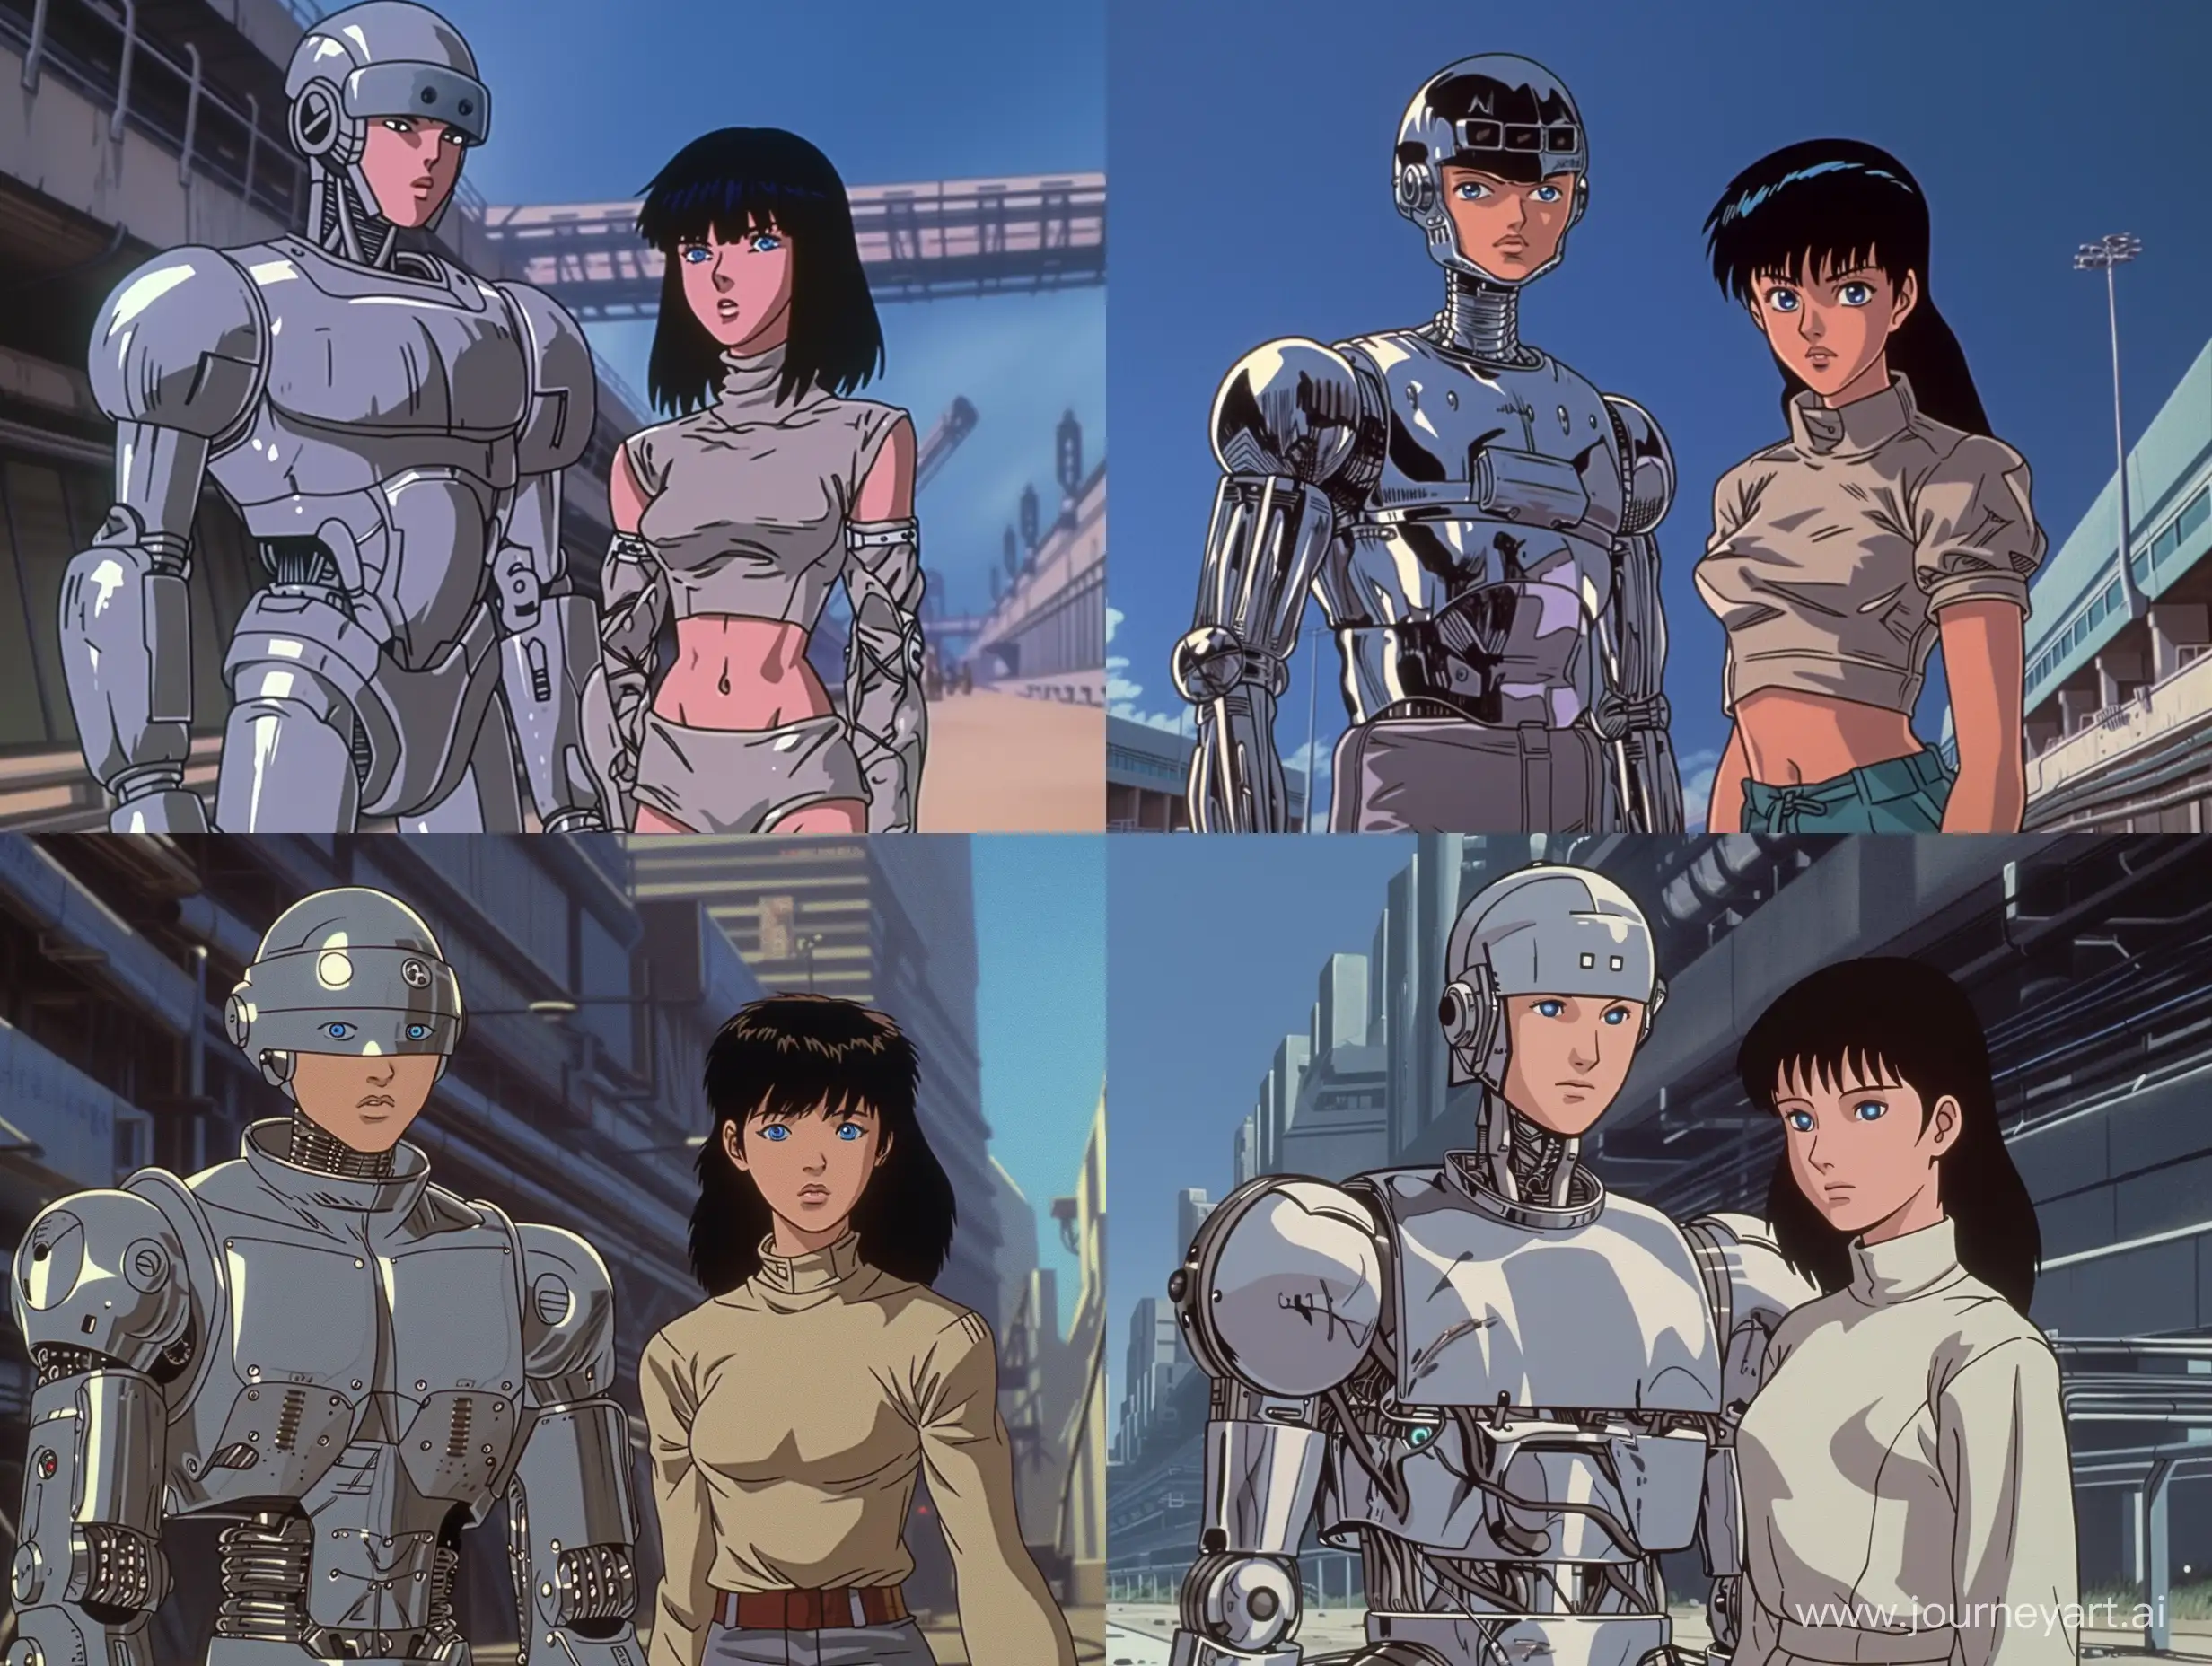 Nostalgic-90s-Anime-Cyborg-Duo-in-Dystopian-Cityscape